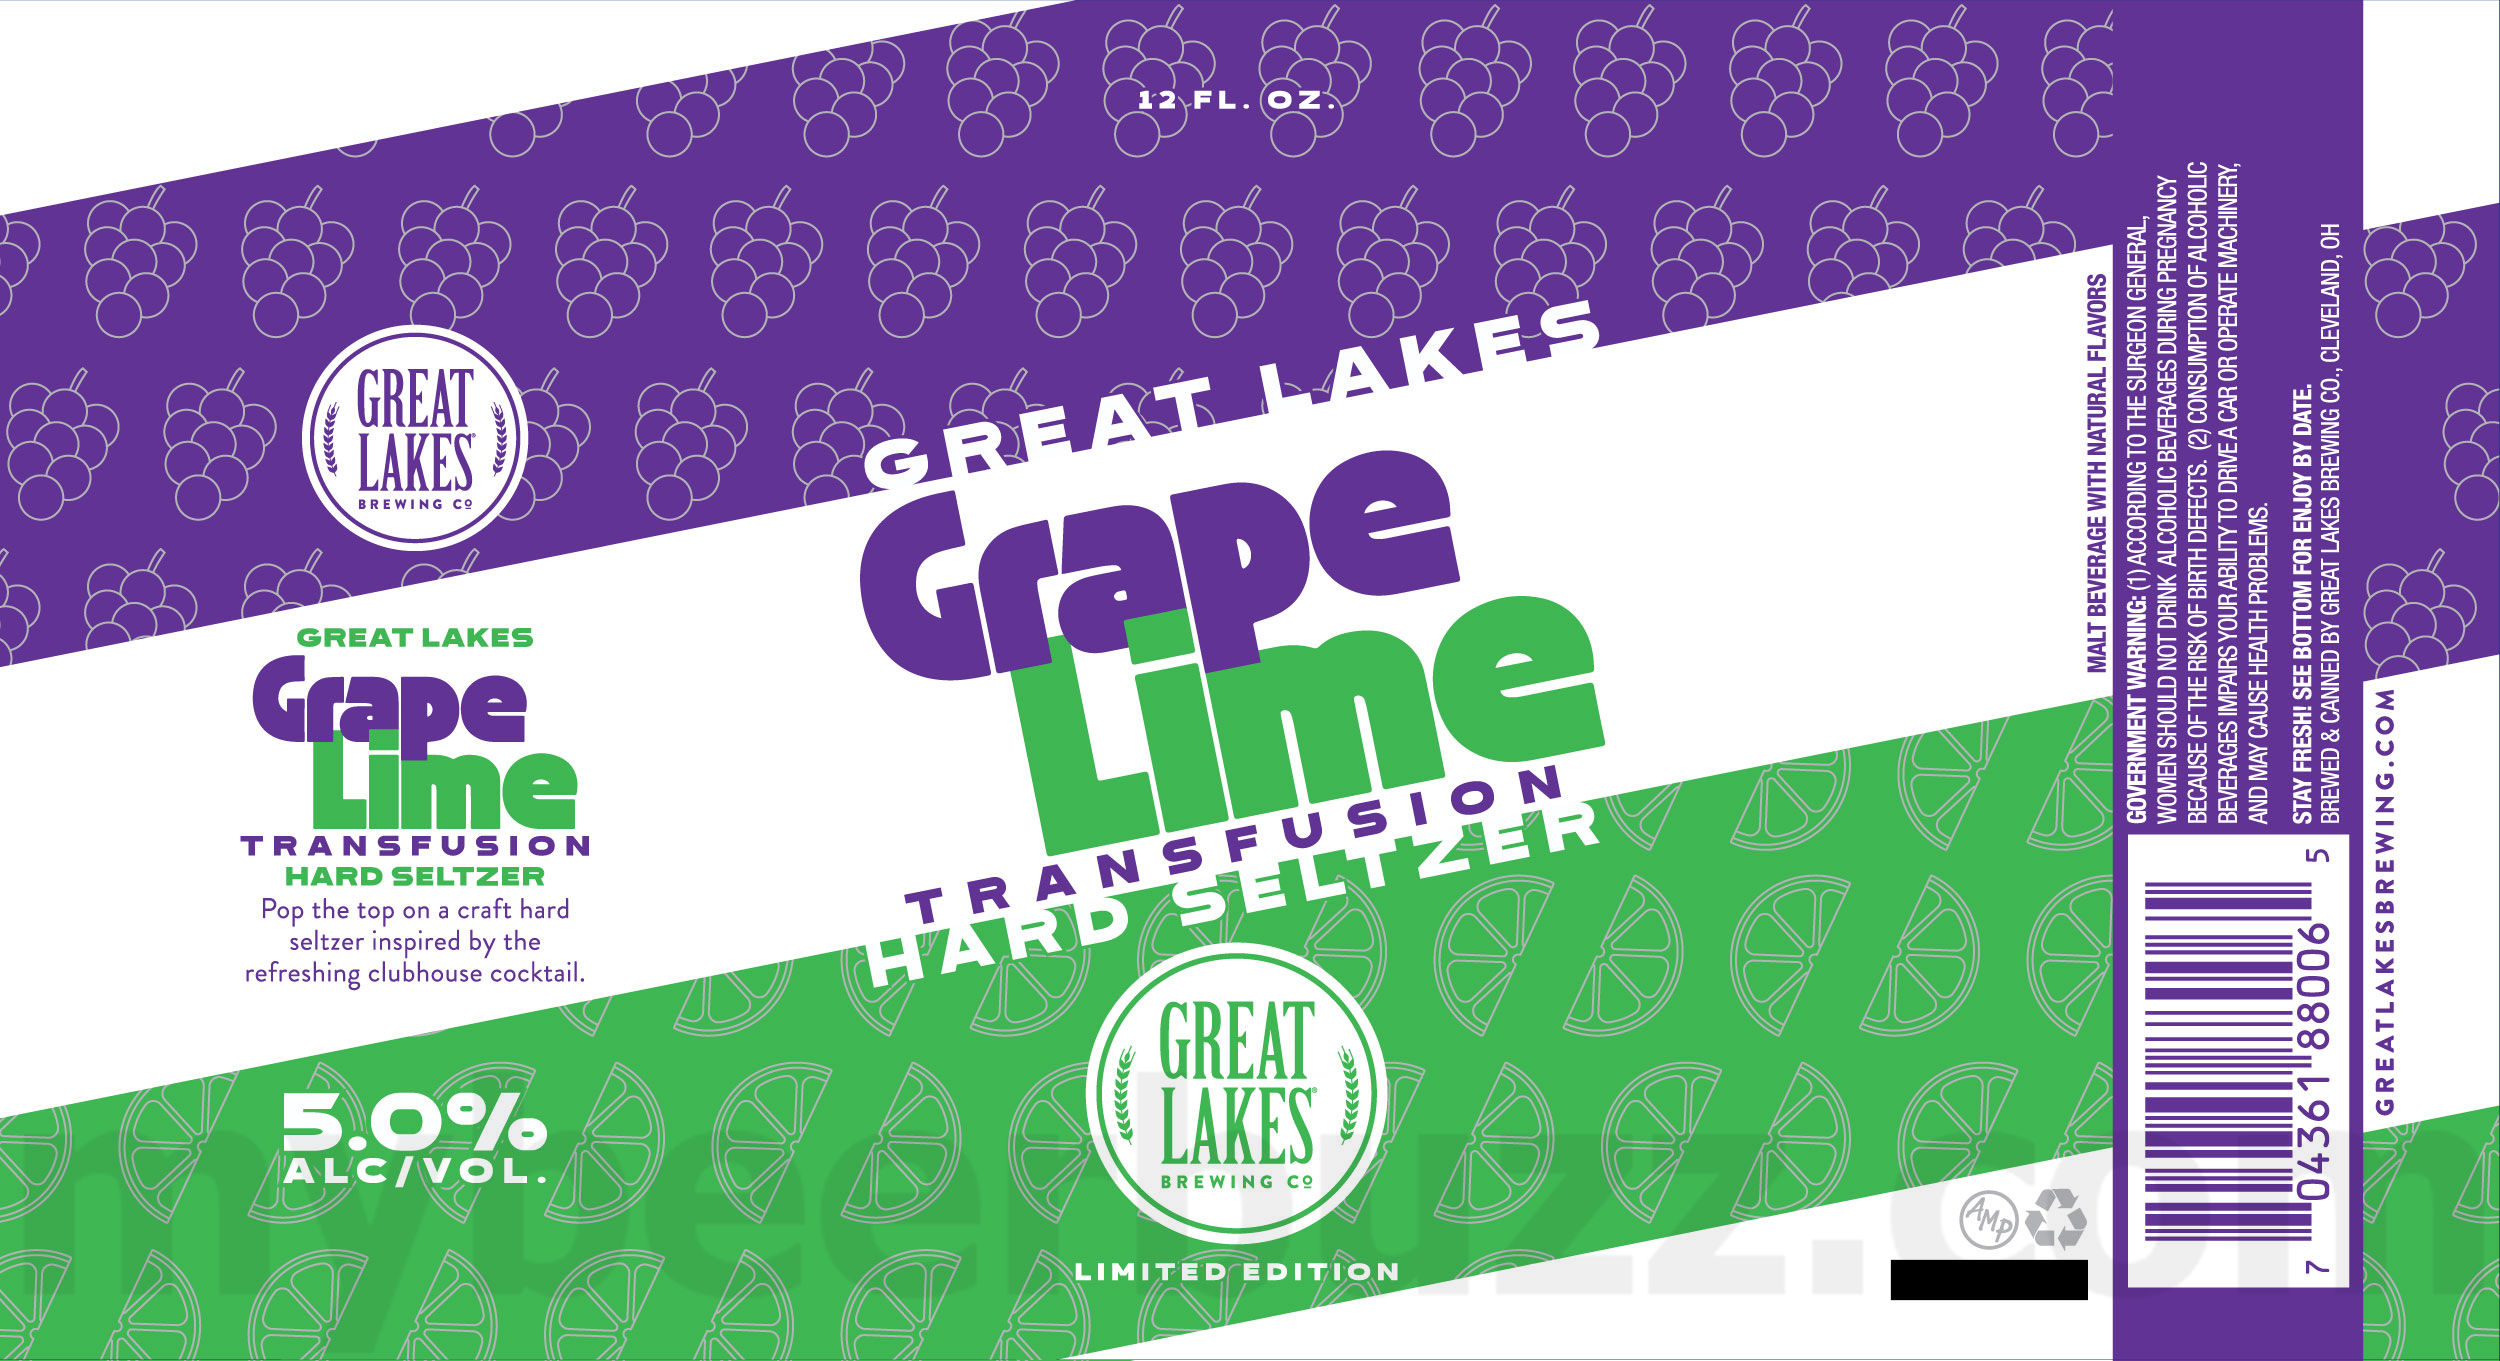 Great Lakes Adding Small Batch Rotator IPA, Bourbon Barrel Imperial Porter & Grape Lime Transfusion Hard Seltzer